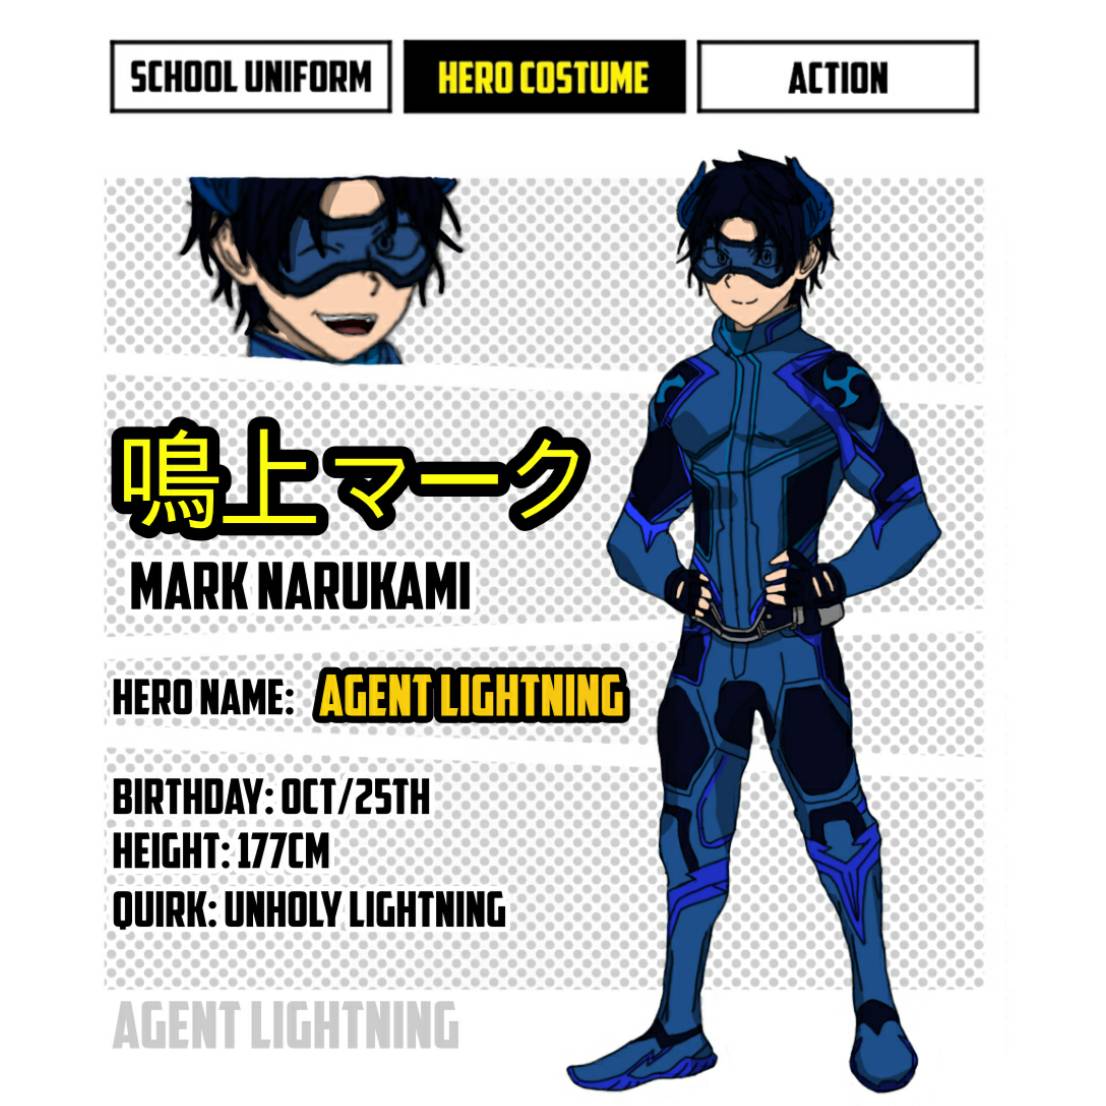 Agent Lightning (Hero Costume) by electricart15 on DeviantArt